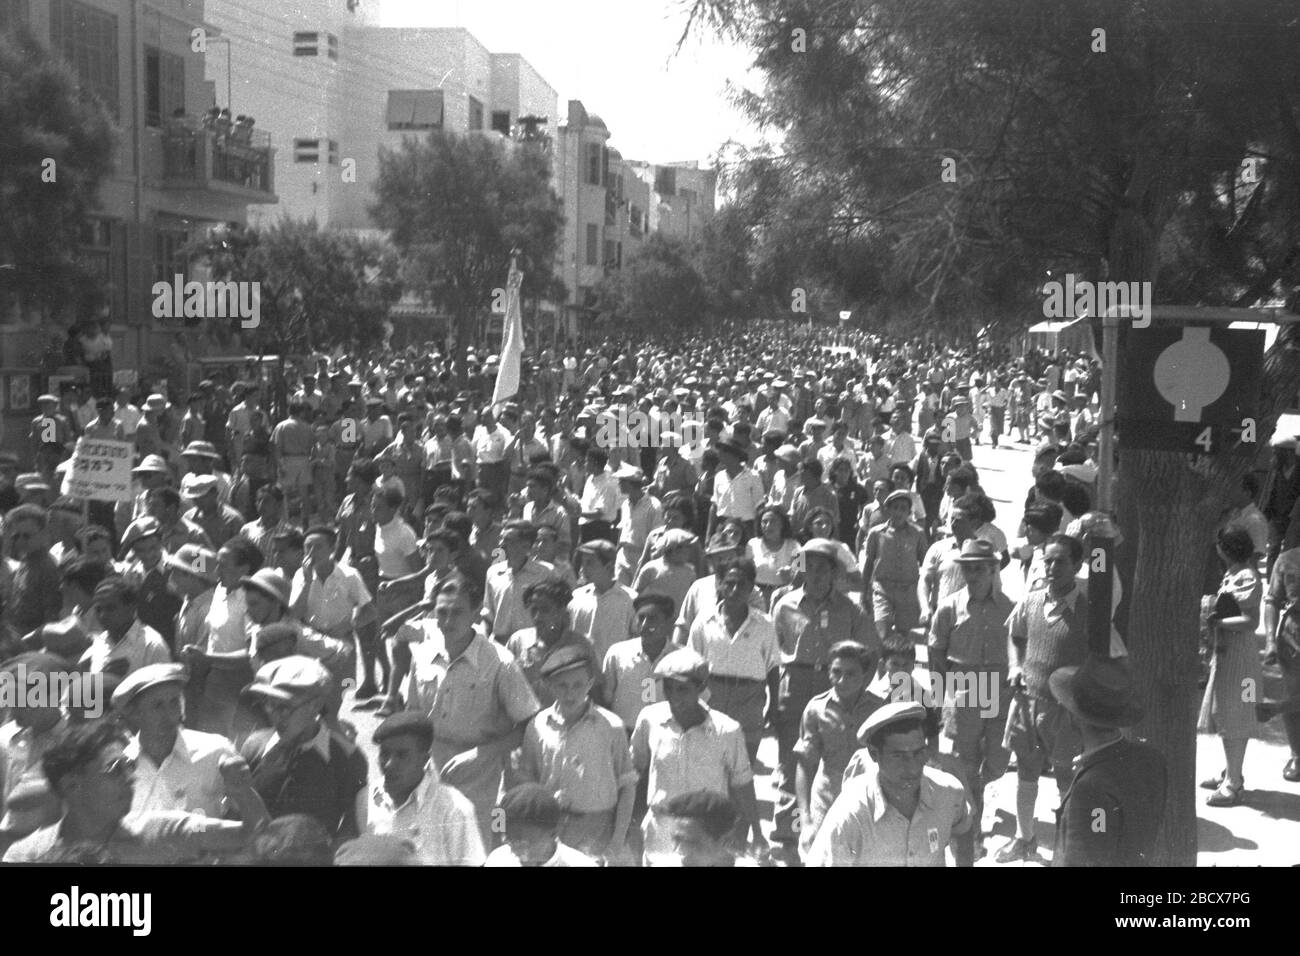 English A Mass Demonstration Against The British White Paper Policy On Ben Yehuda Street In Tel Aviv I I U O E I I U I O E O I E E U O I I I I E U E E O E I I U I O I I